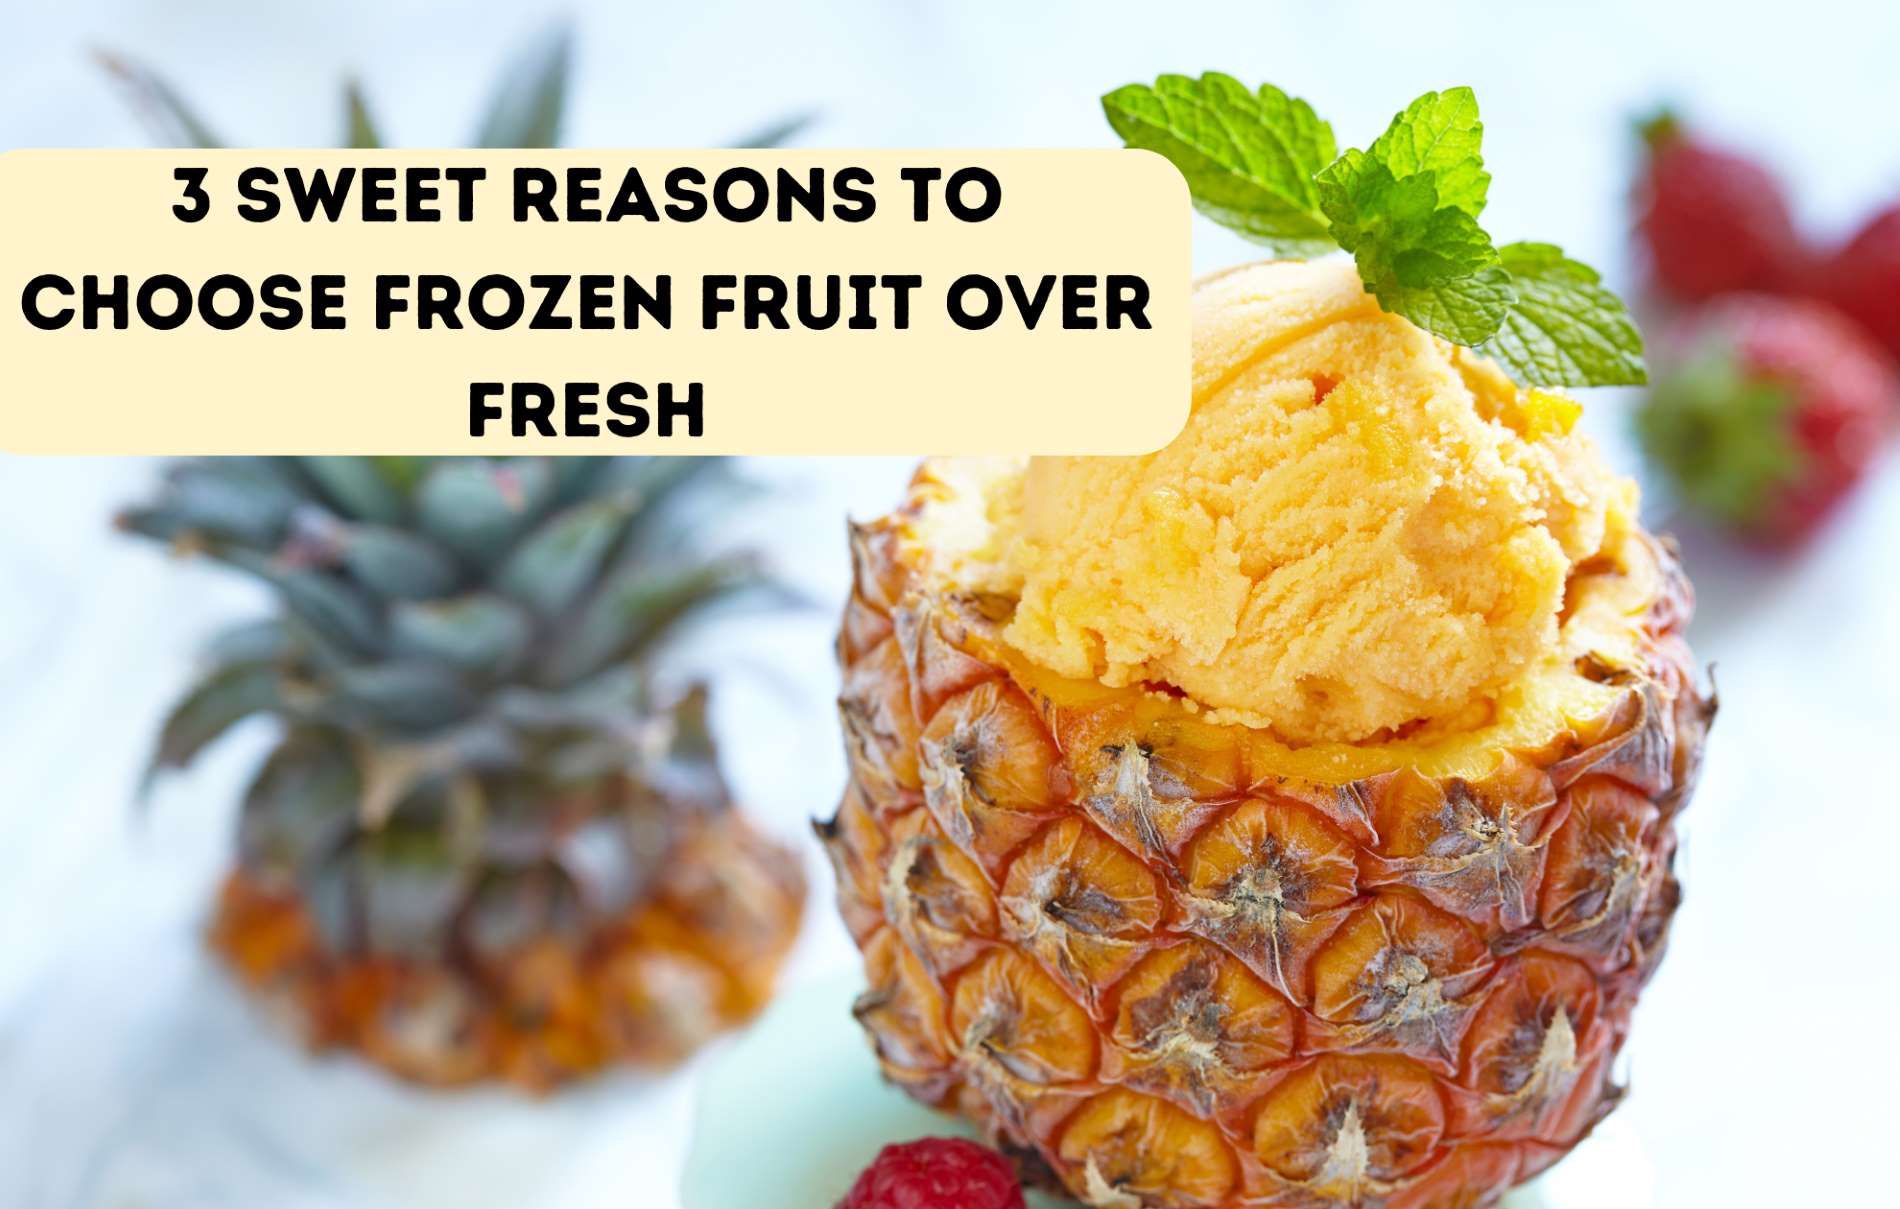 3 Sweet Reasons to Choose Frozen Fruit Over Fresh